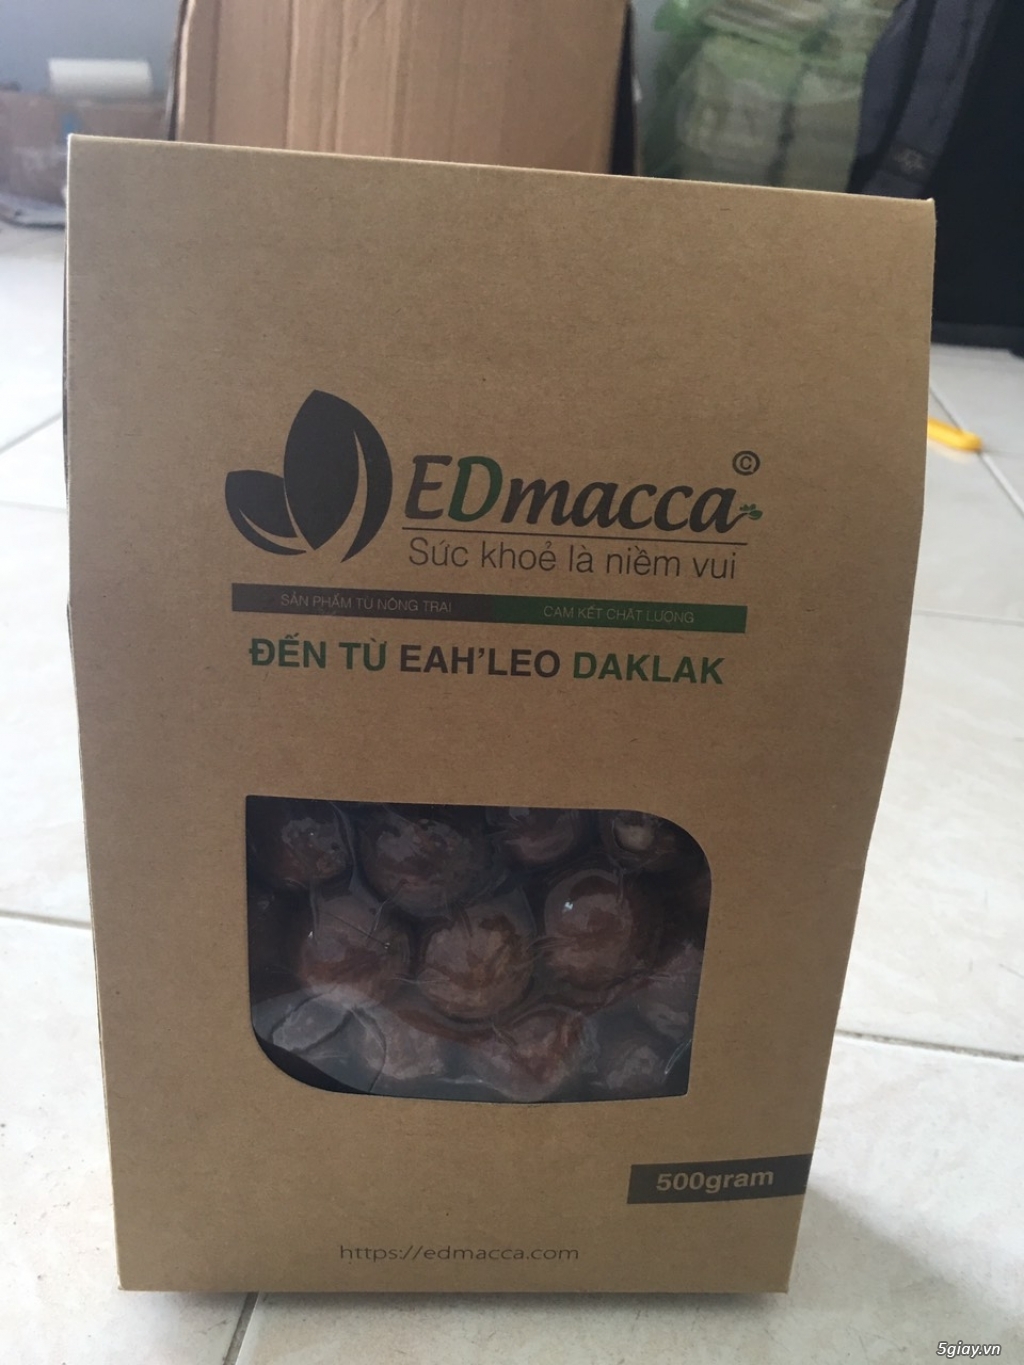 EDmacca - macca đắk lắk nguyên chất 500gram từ eah'leo